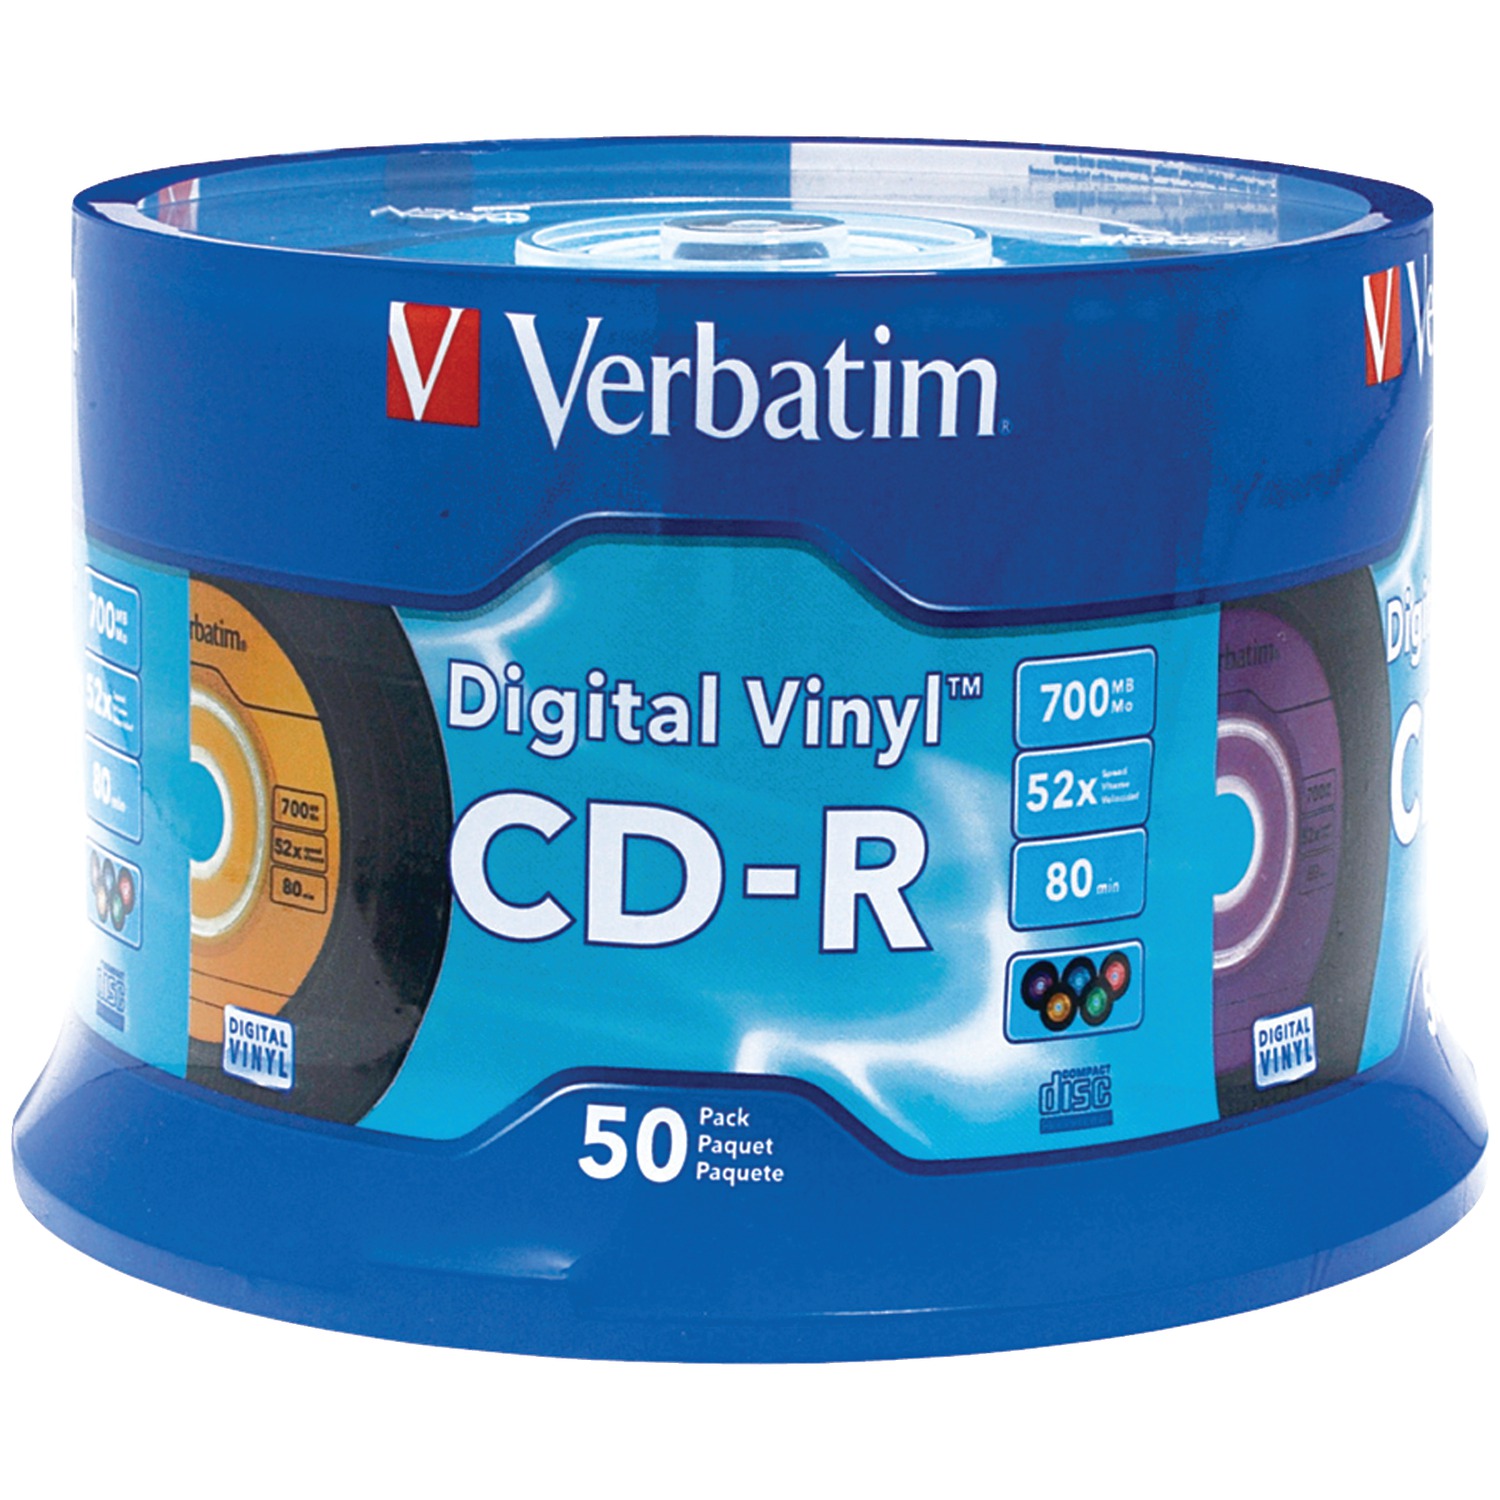 Verbatim Digital Vinyl 700MB 52X CD-R 50 Packs Spindle Disc Model 94587 - image 2 of 2